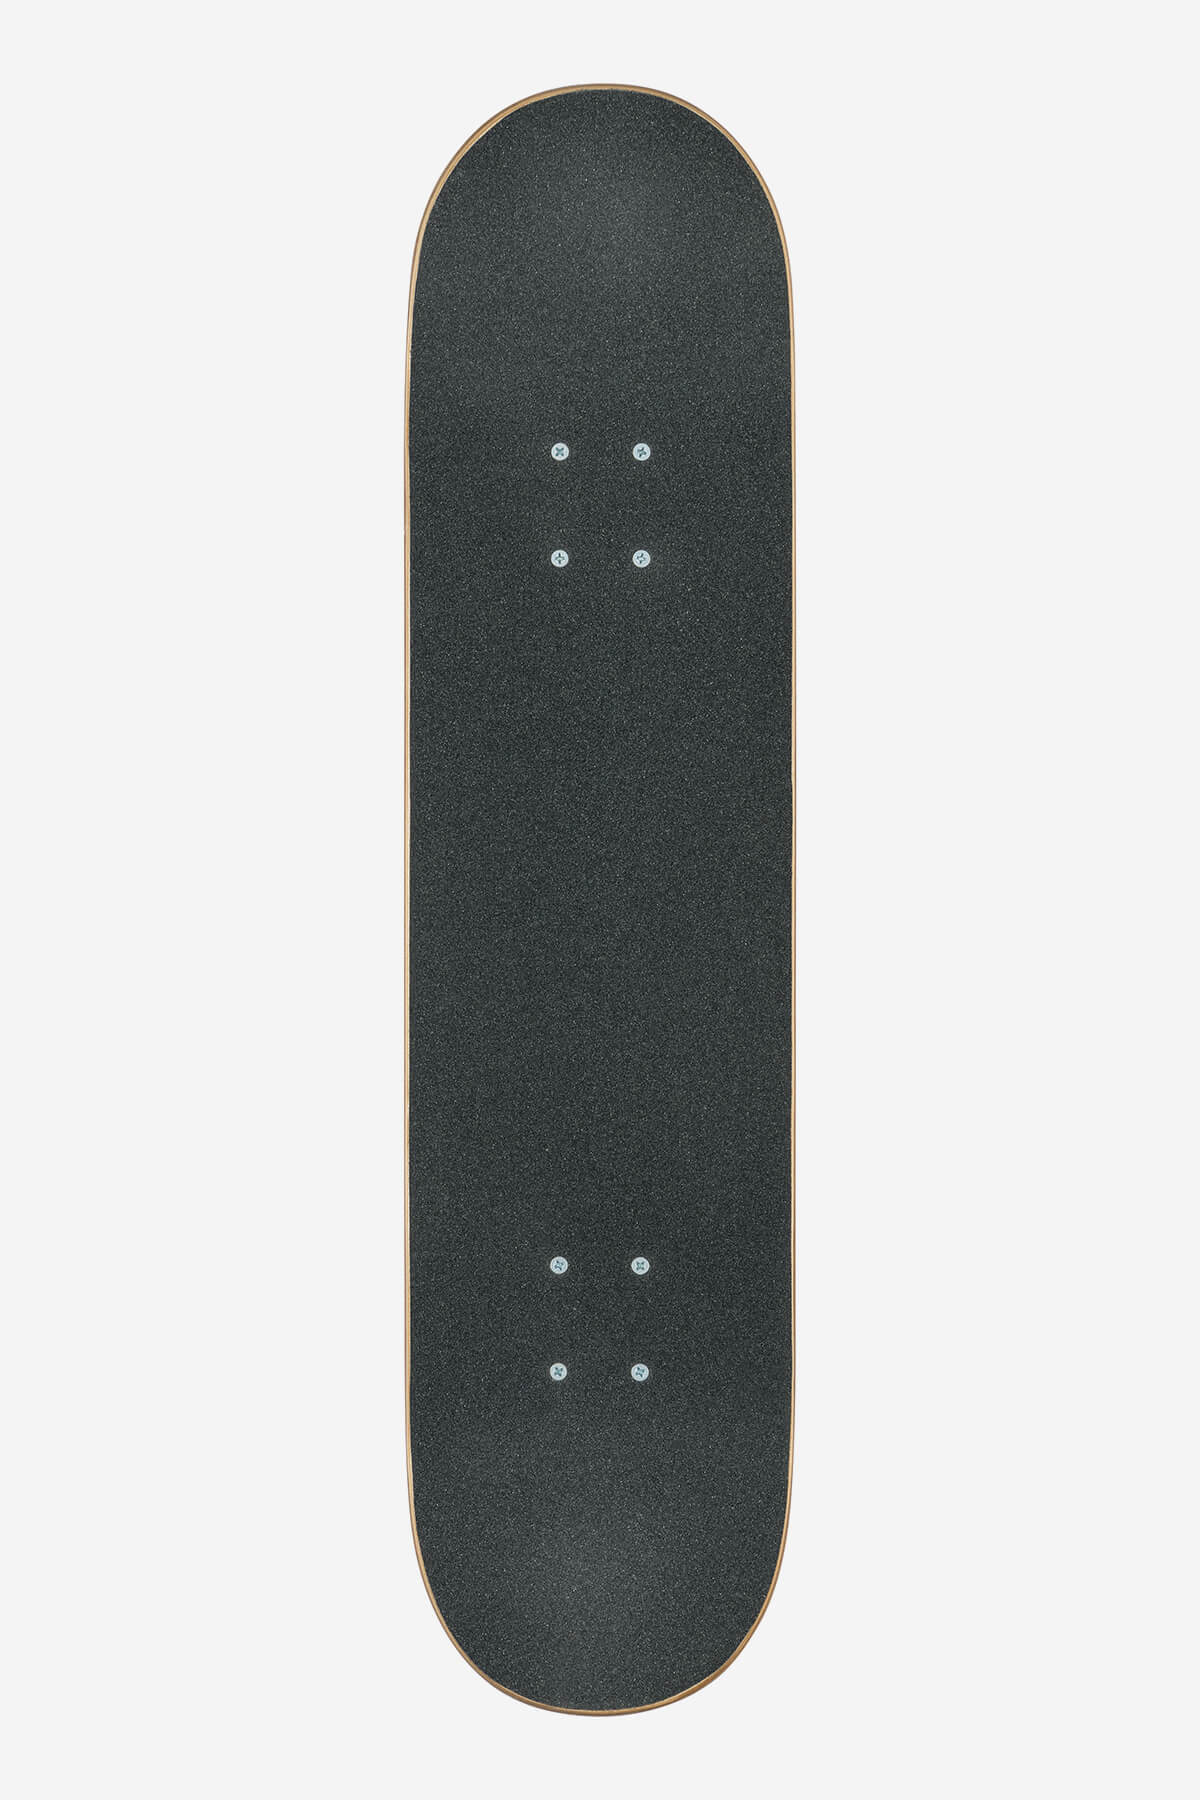 Globe - G0 Fubar - Black/Red - 7.75" Complete Skateboard